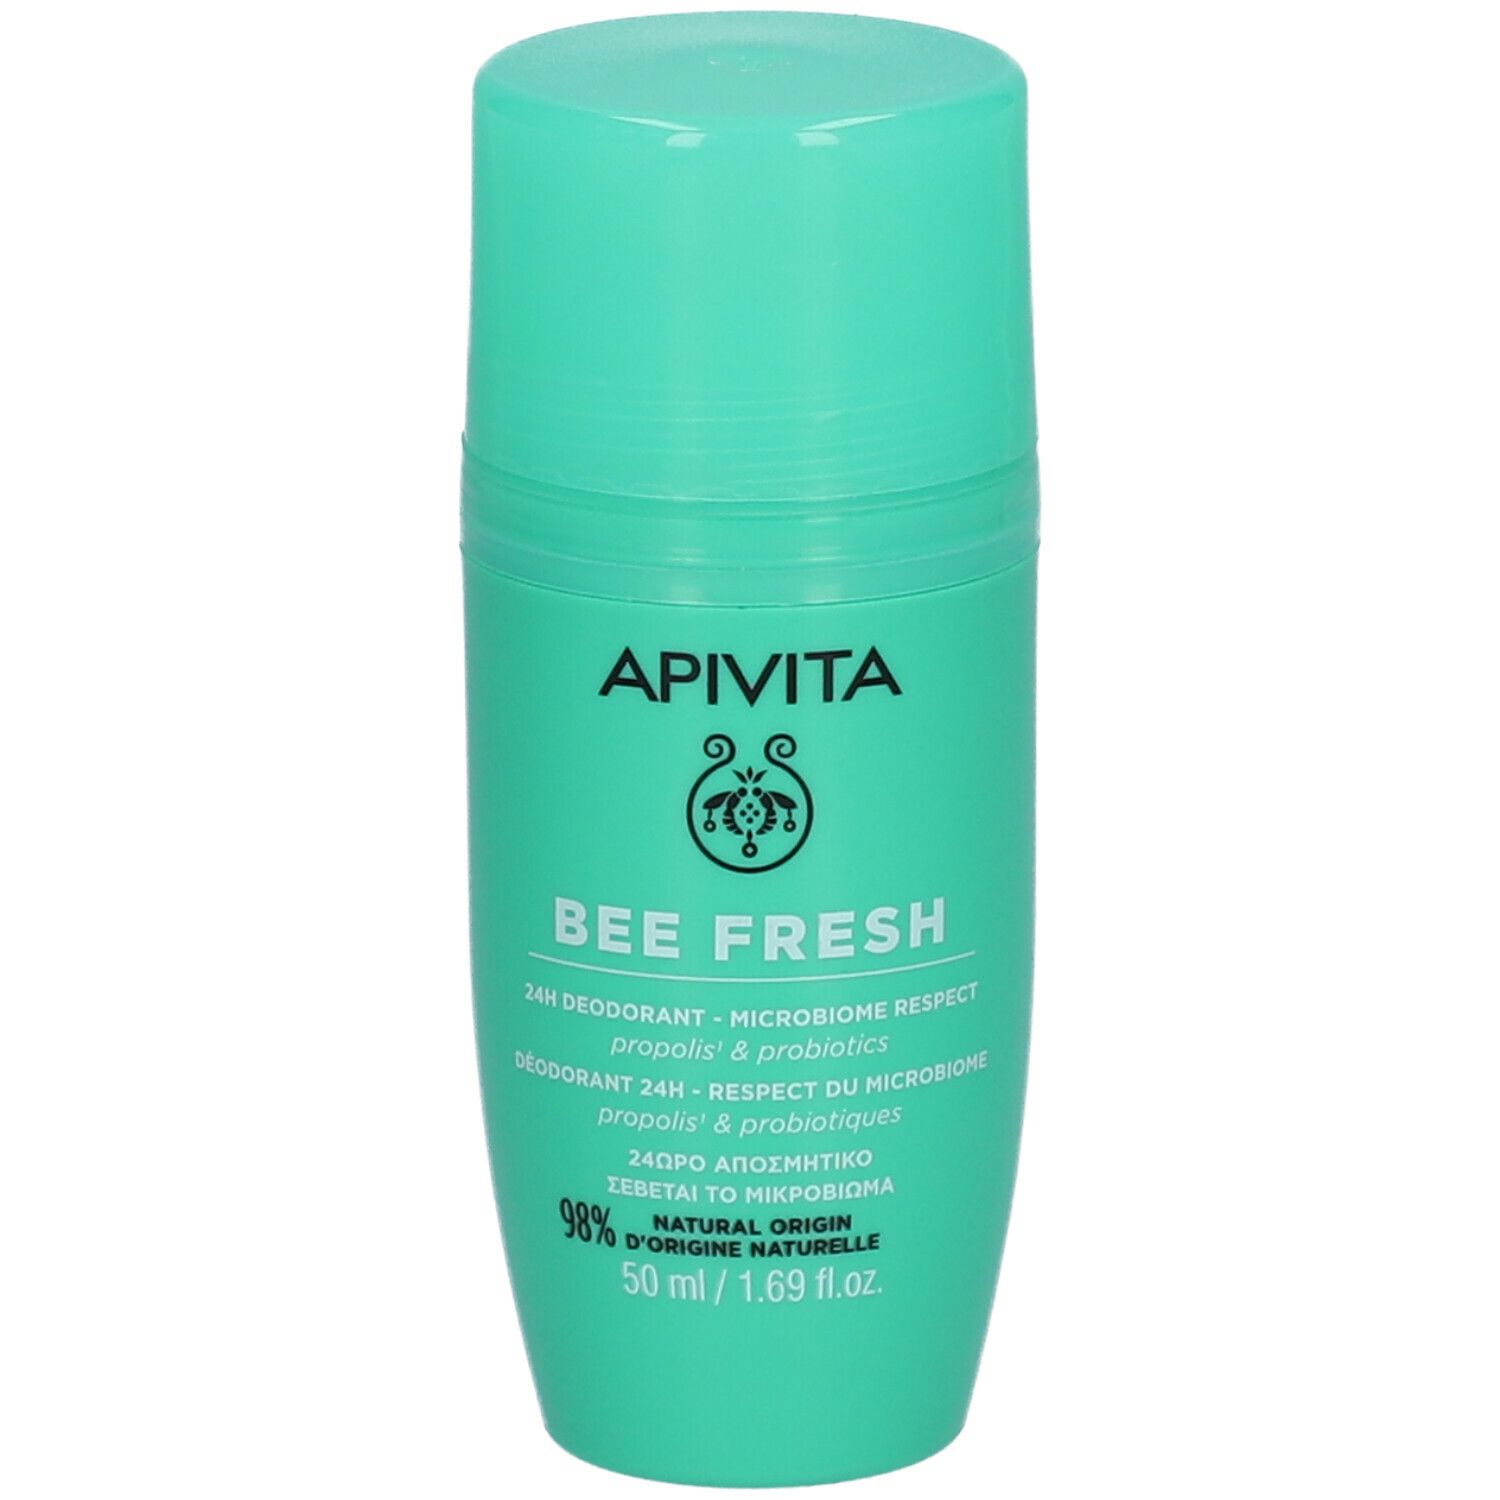 Apivita Bee Fresh Déodorant 24 h - Respect du microbiome